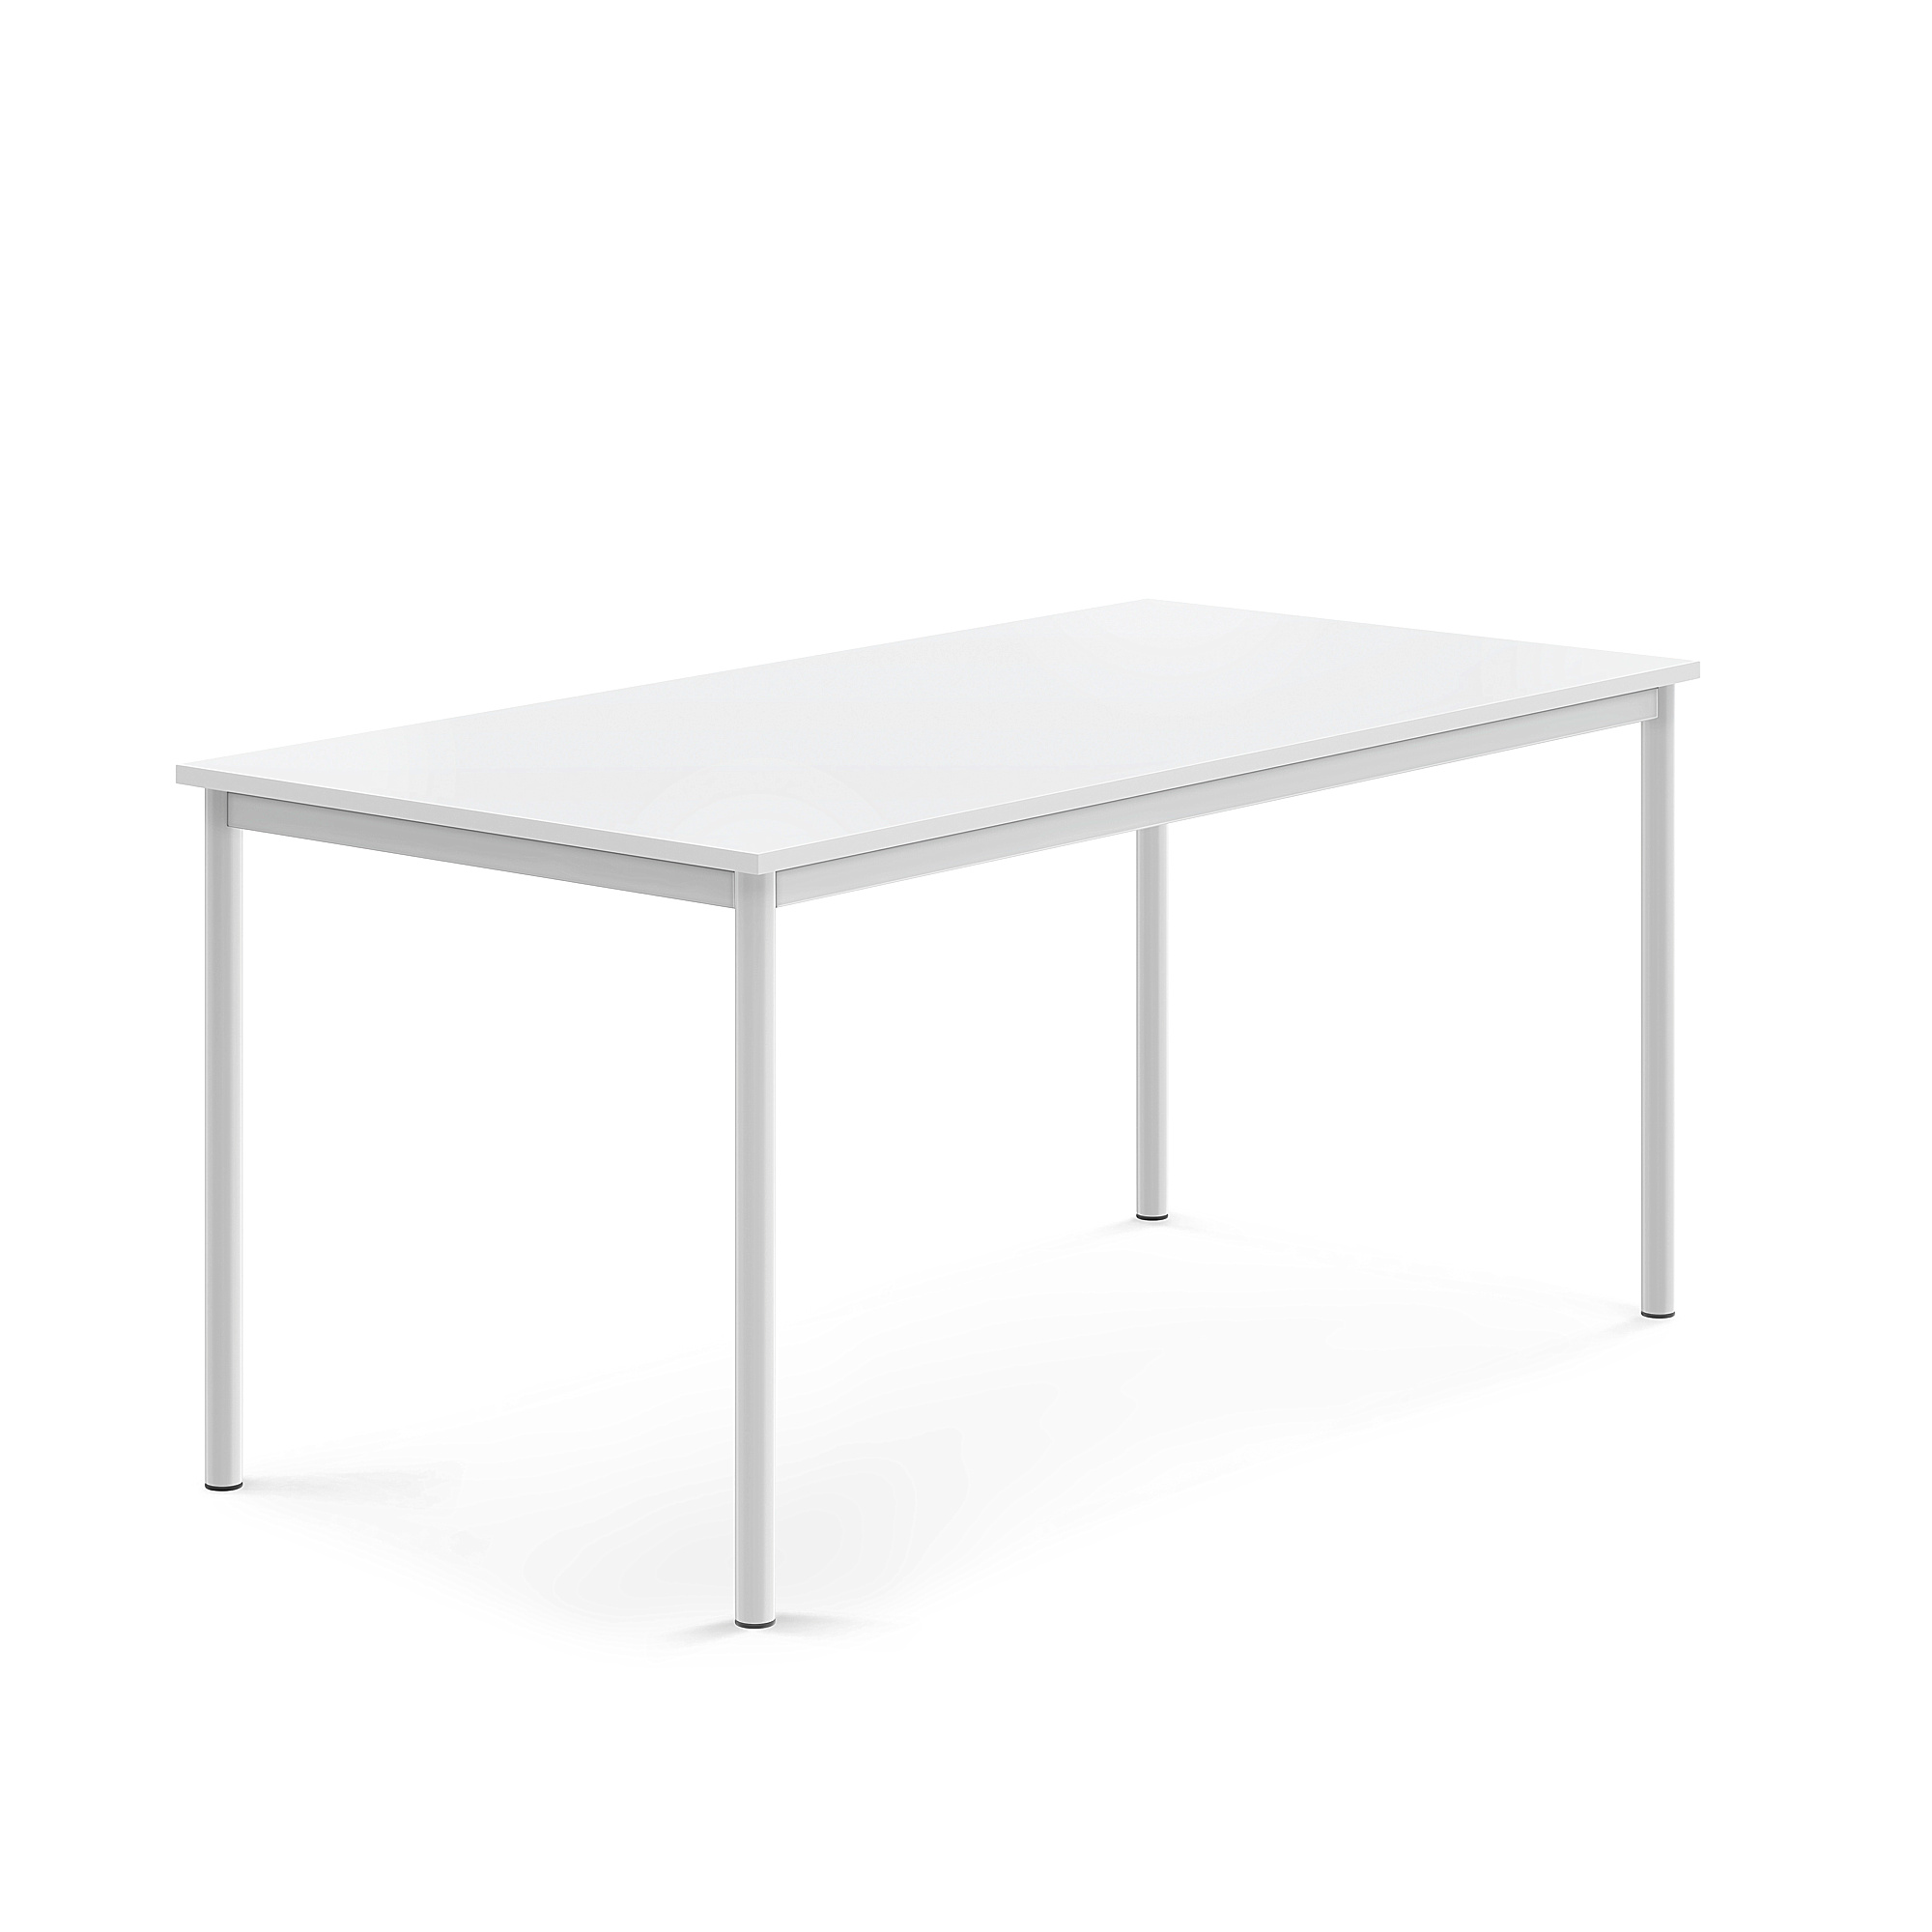 Stůl SONITUS, 1600x800x720 mm, bílé nohy, HPL deska tlumící hluk, bílá